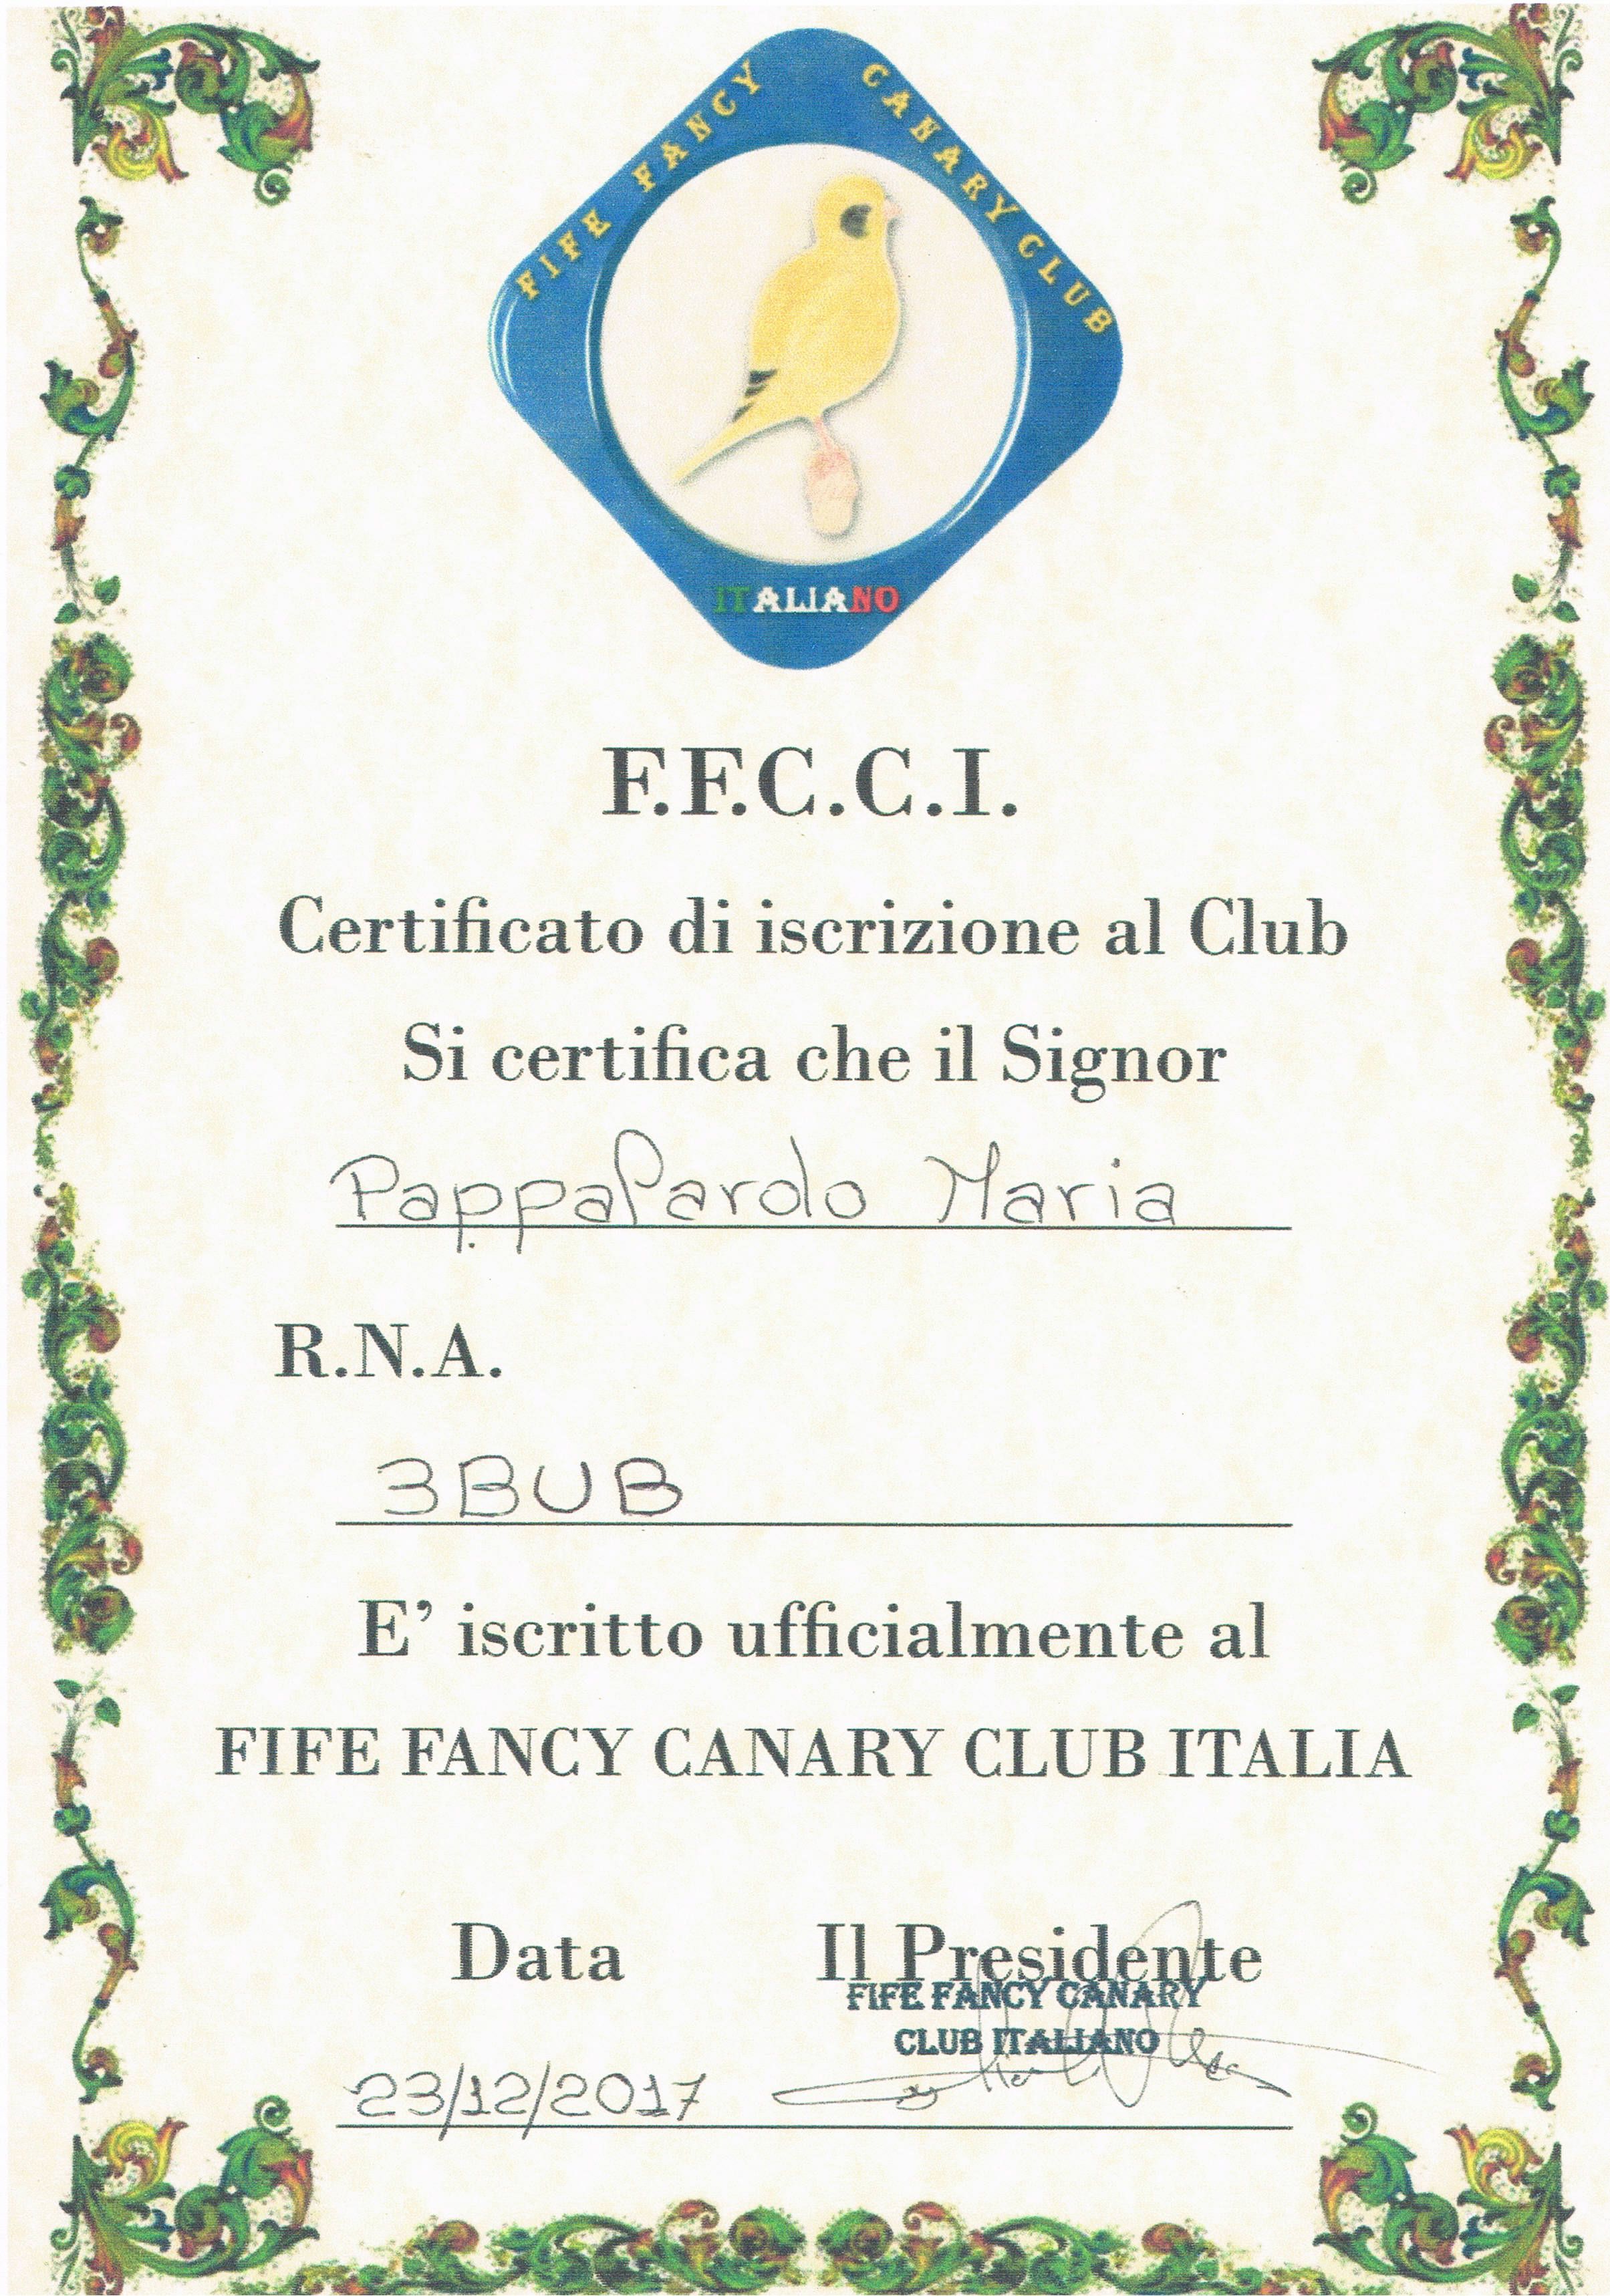 Socio Faife Fancy Canary Club Italiano 